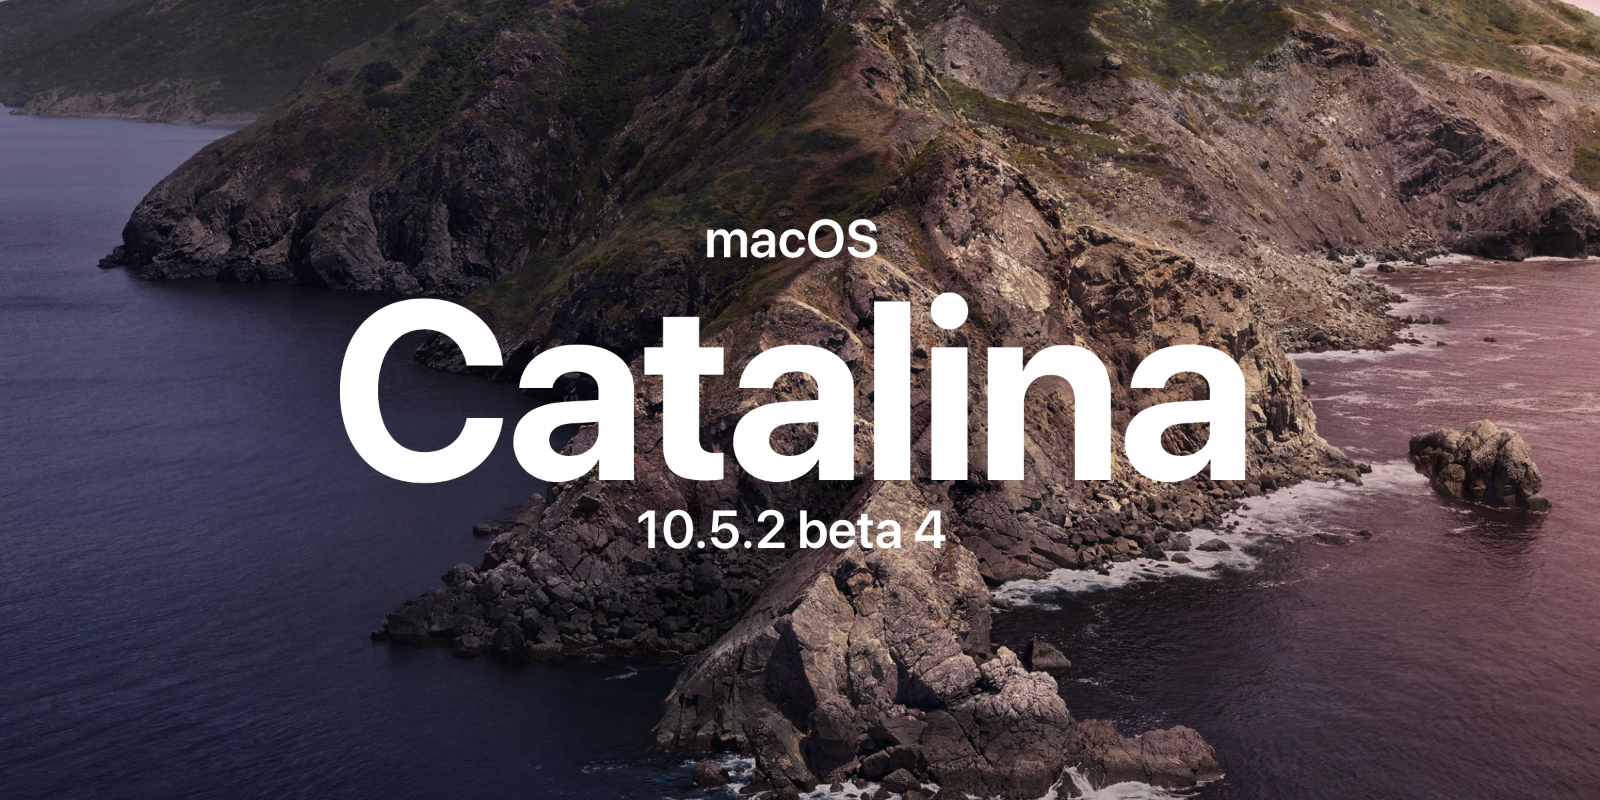 macOS Catalina 10.15.2 beta 4